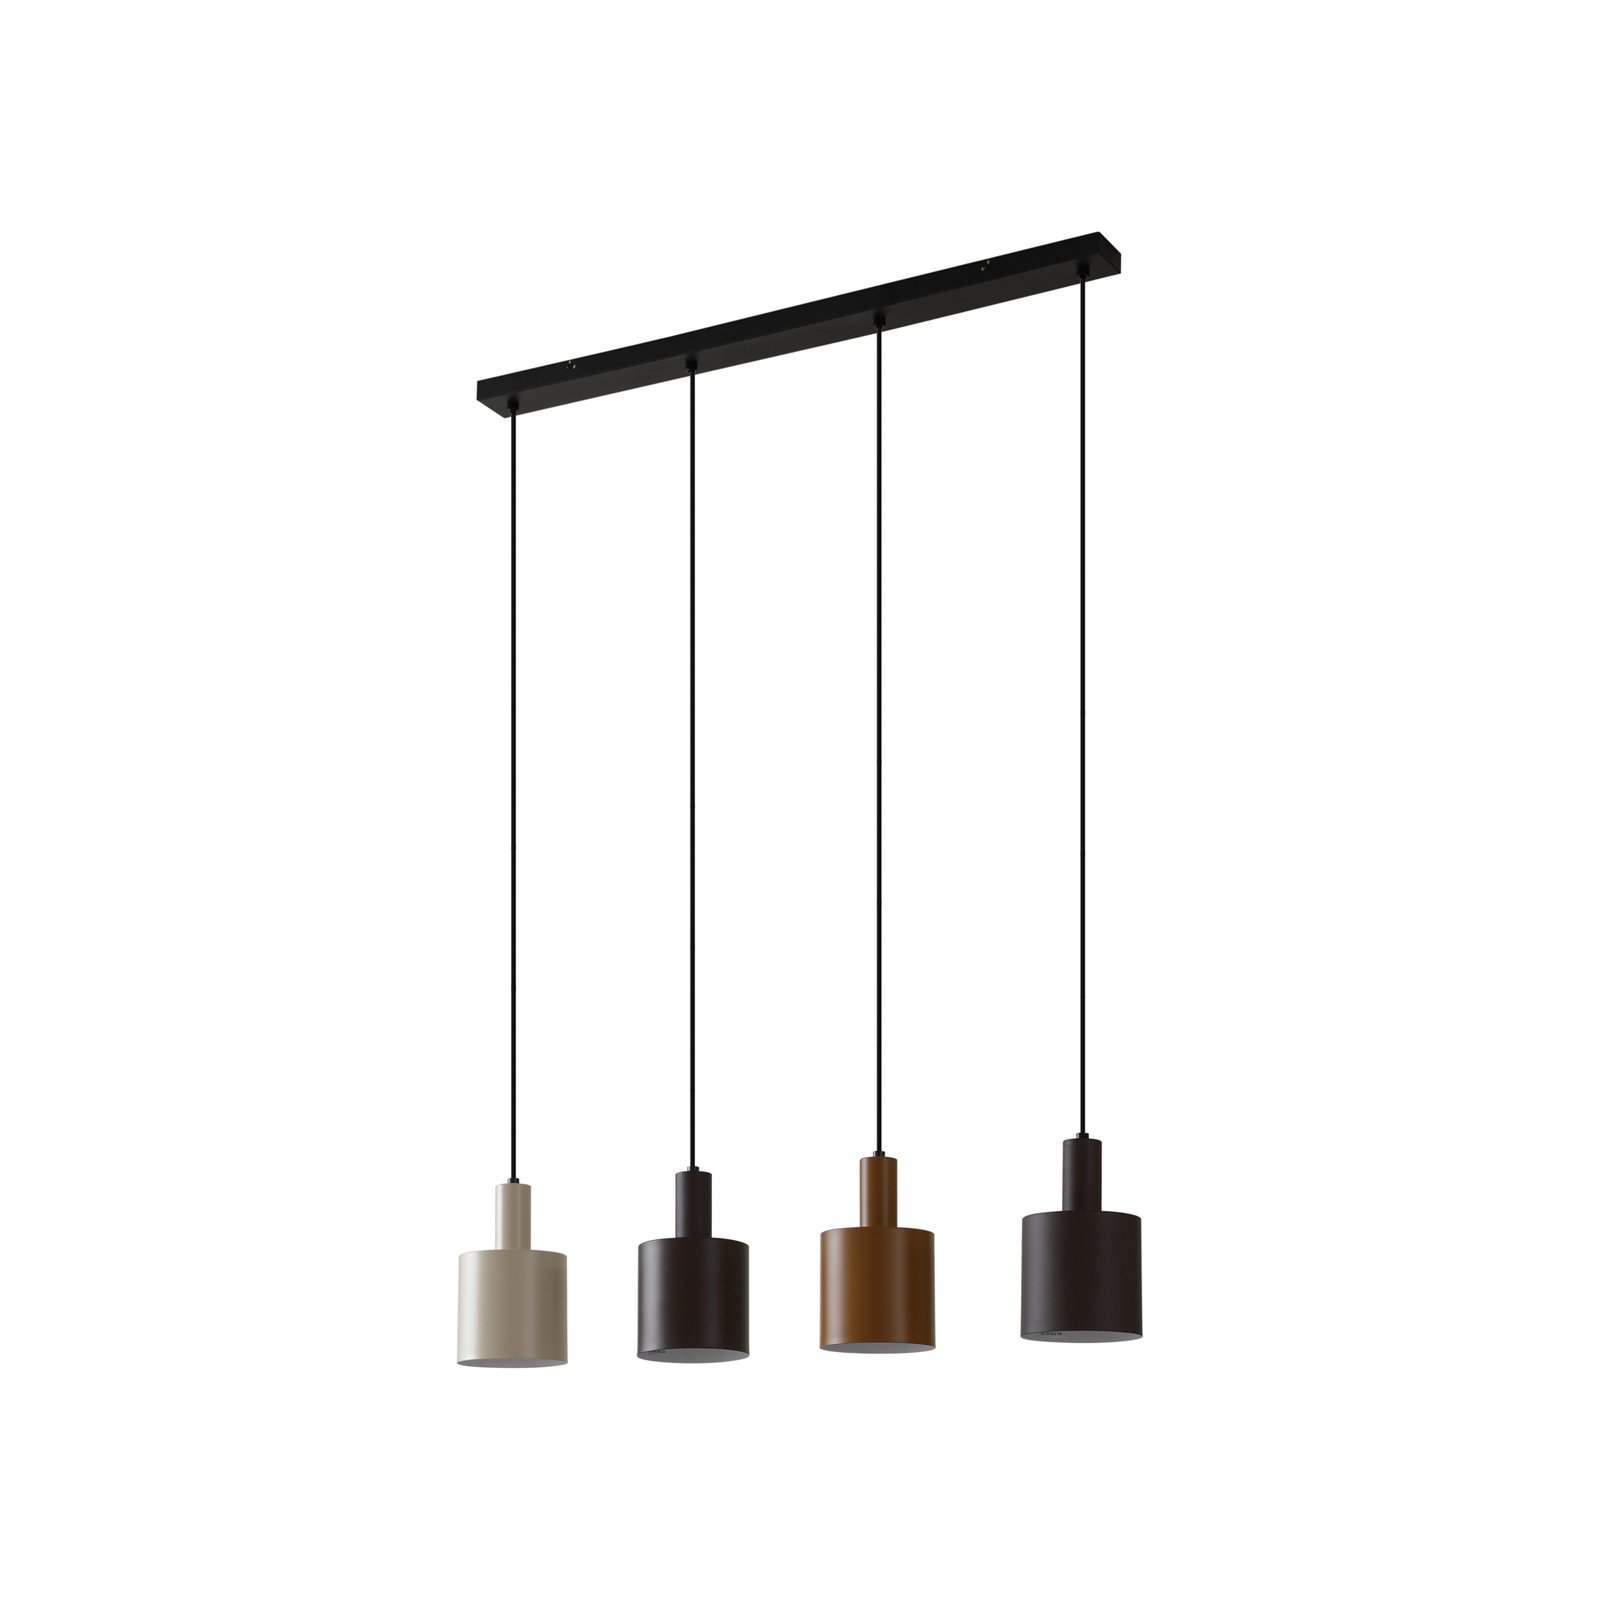 Lindby hanglamp Ovelia, zwart/bruin/beige, 4-lamps.